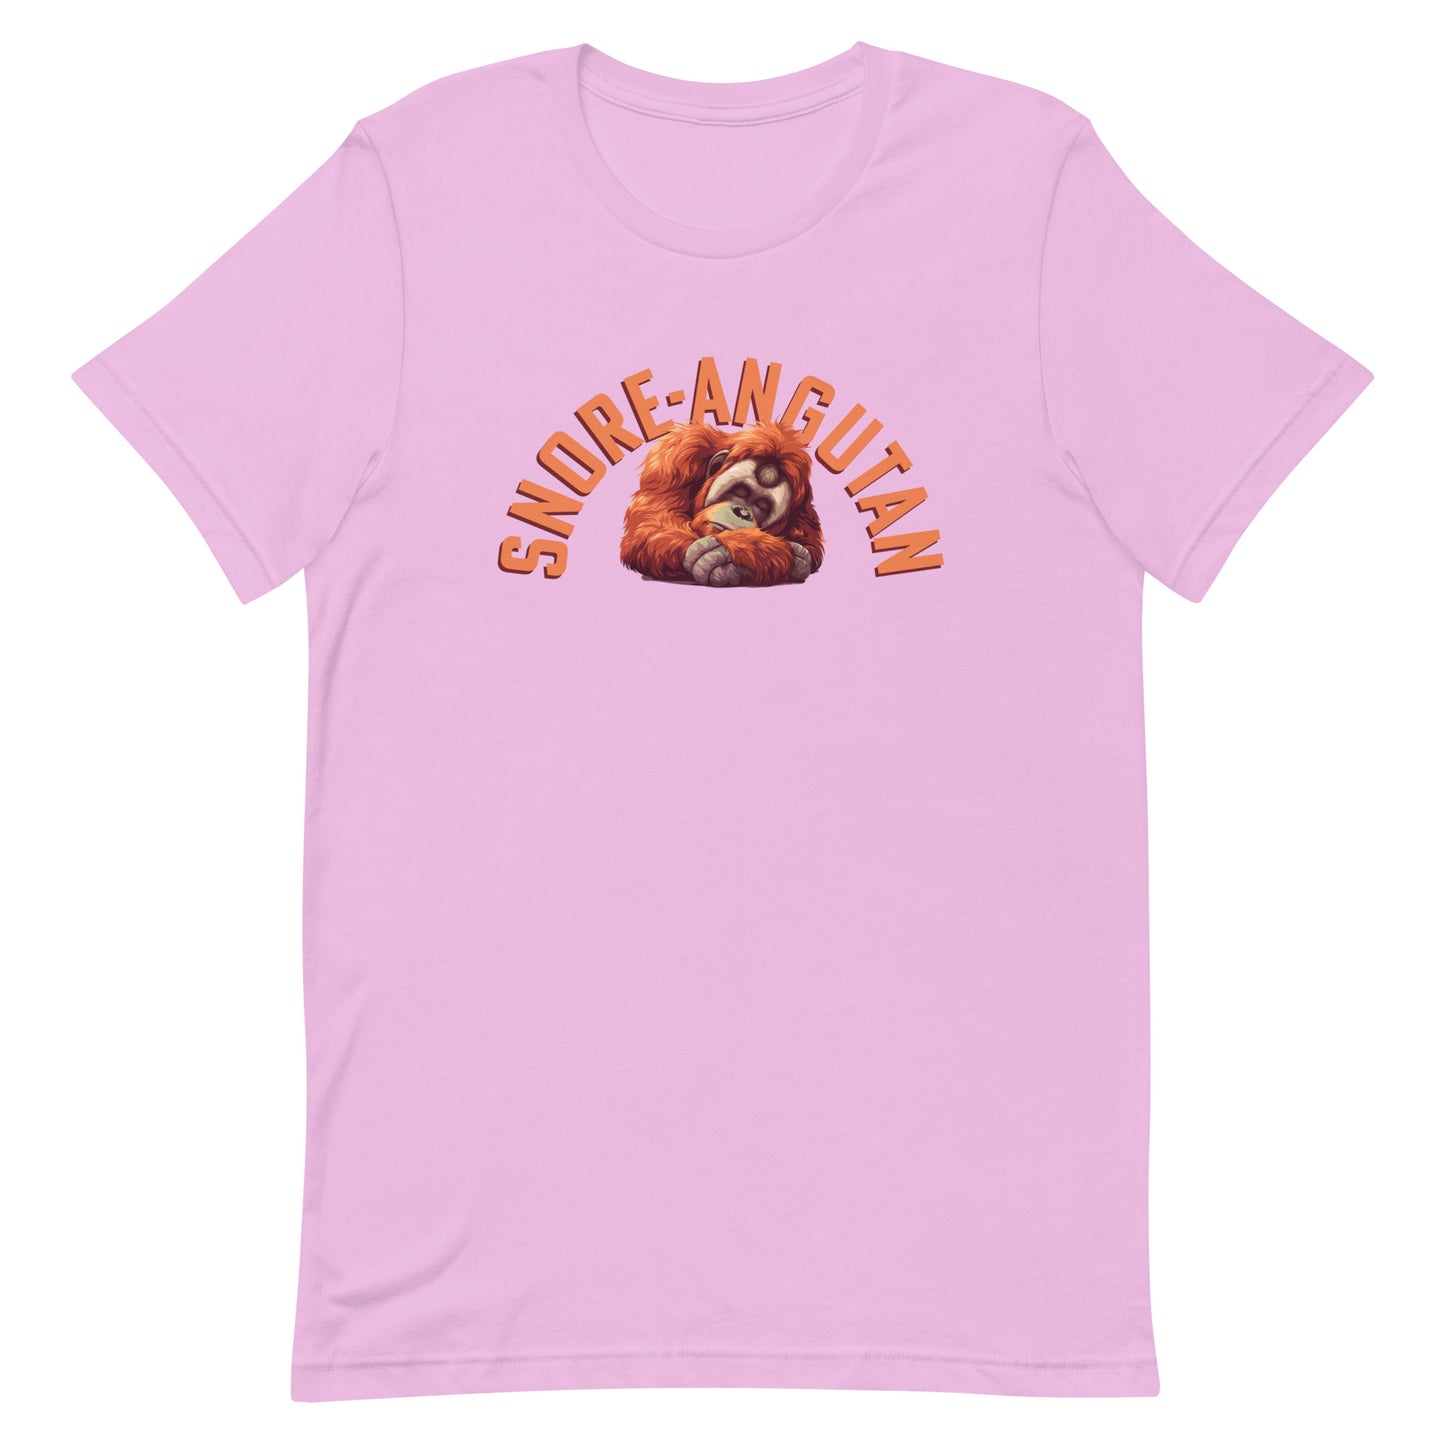 SNORE-ANGUTAN-Orangutan-Sleep-Animals-Cute-Graphic Tee Shirt-Lilac